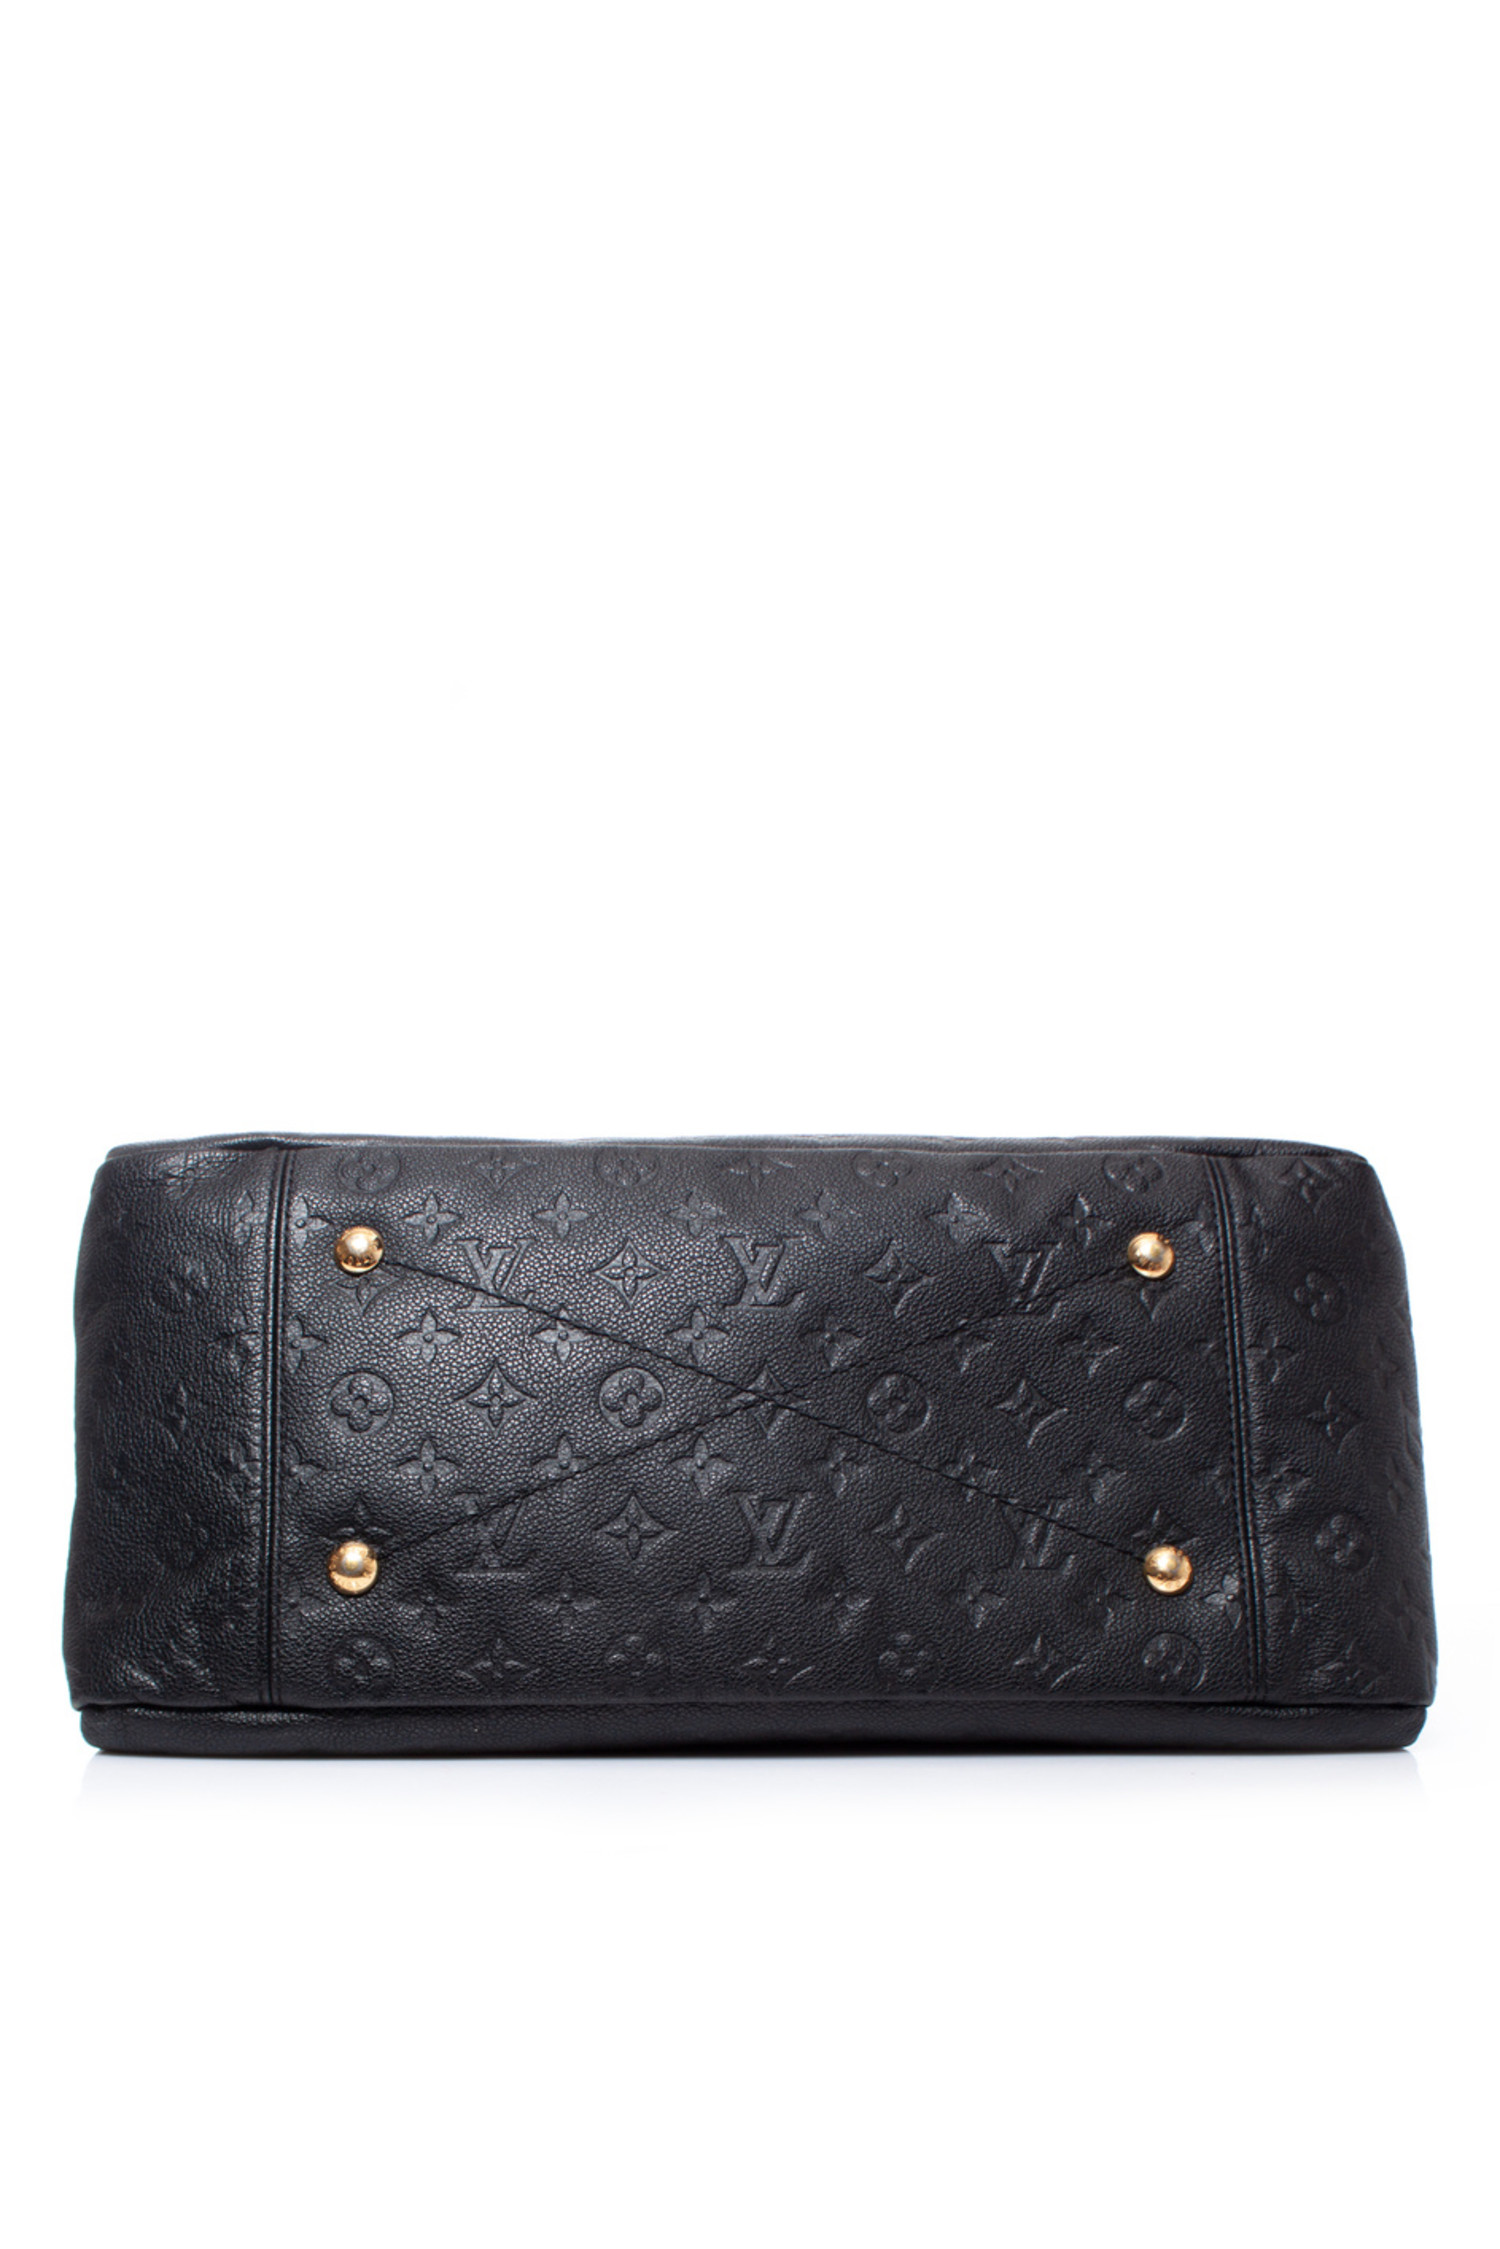 Louis Vuitton, Artsy MM Monogram Empreinte Leather in black